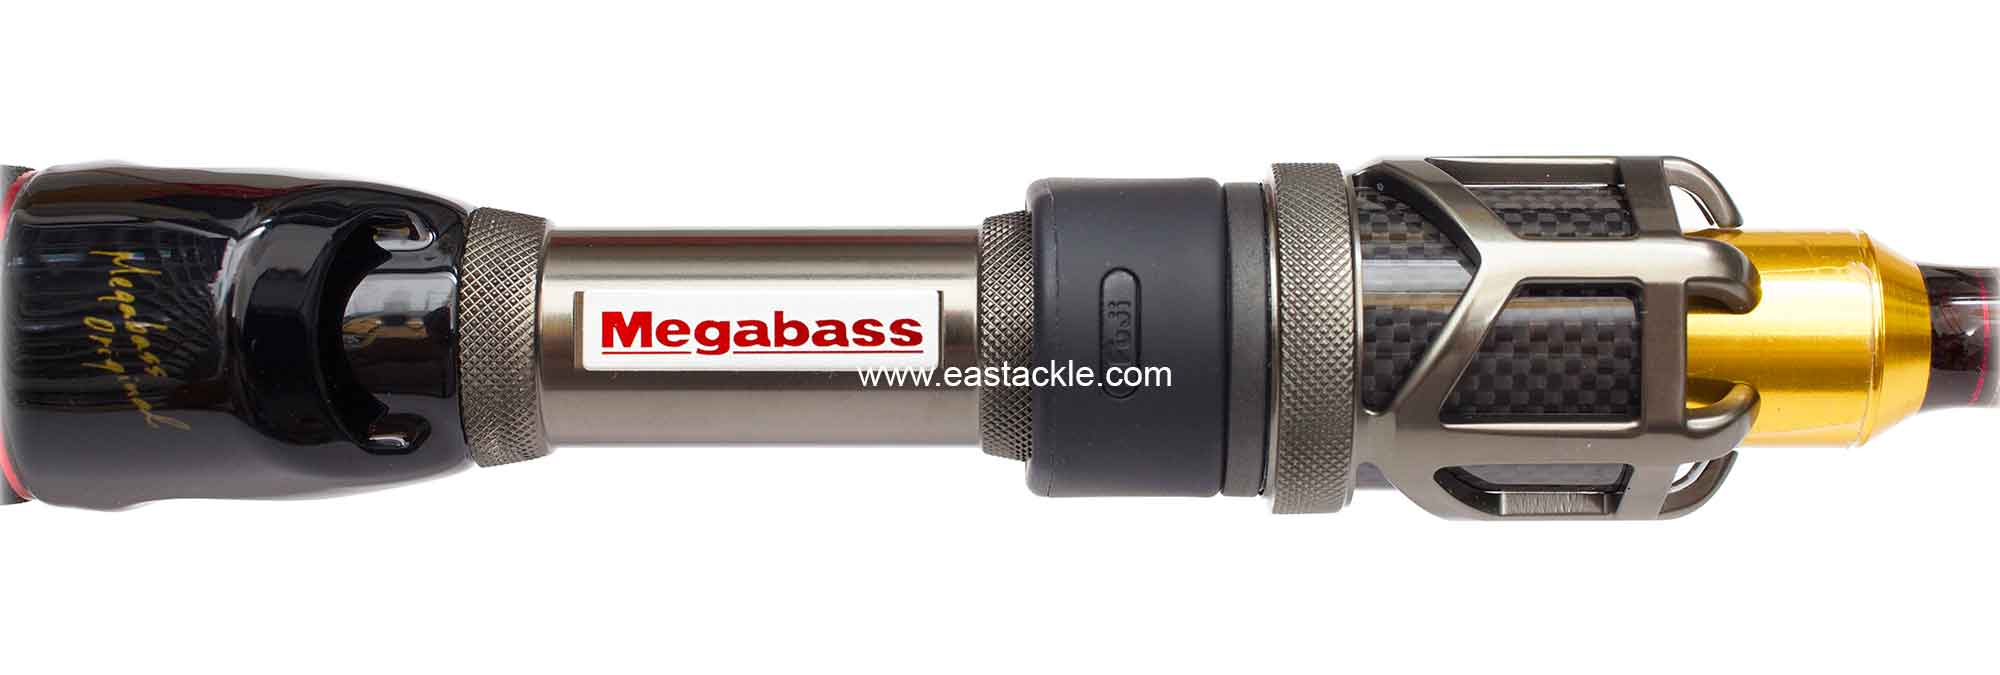 Megabass - Destroyer EVOLUZION (C40) - F3.1/2-610ti - GRIFFON EVOLUTION - Bait Casting Rod - Reel Seat